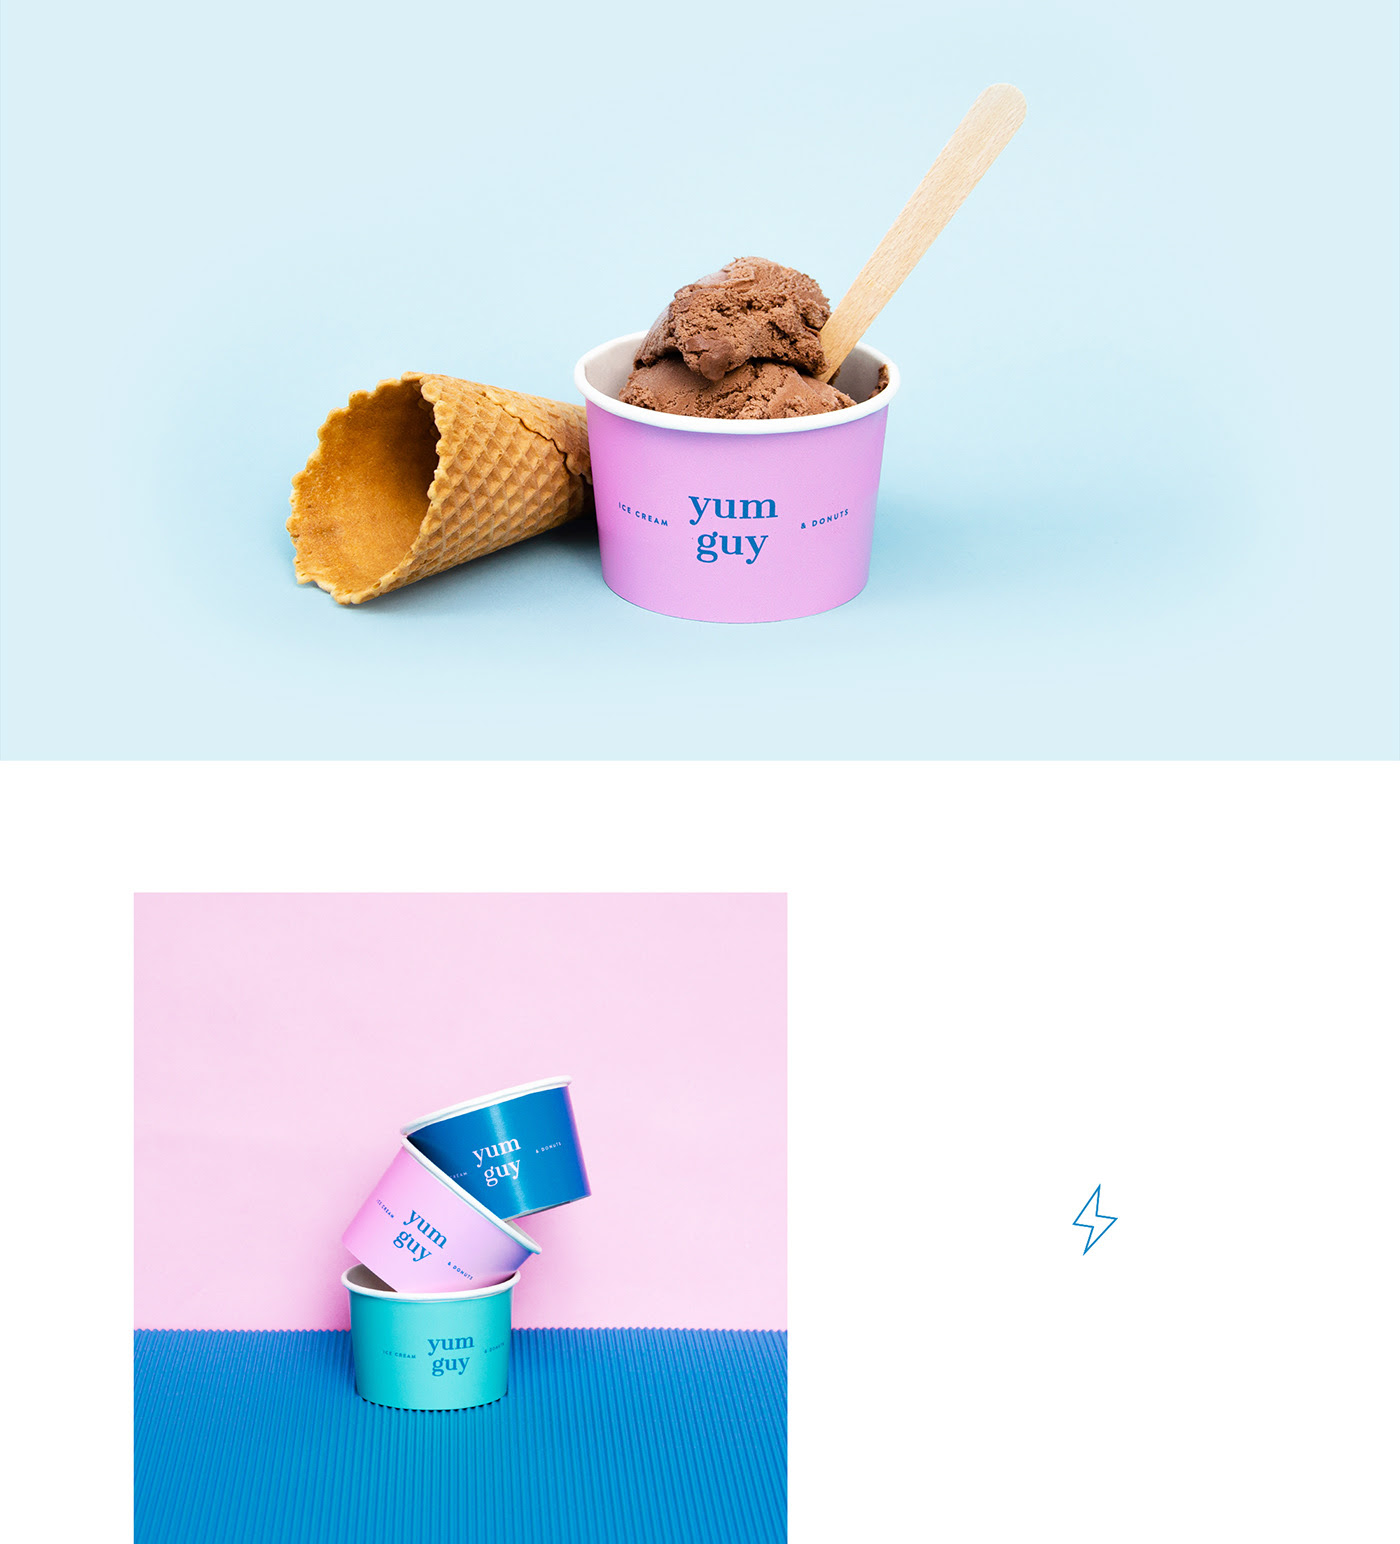 Bright & Fun Yum Guy Ice Cream Branding by STRETCHD